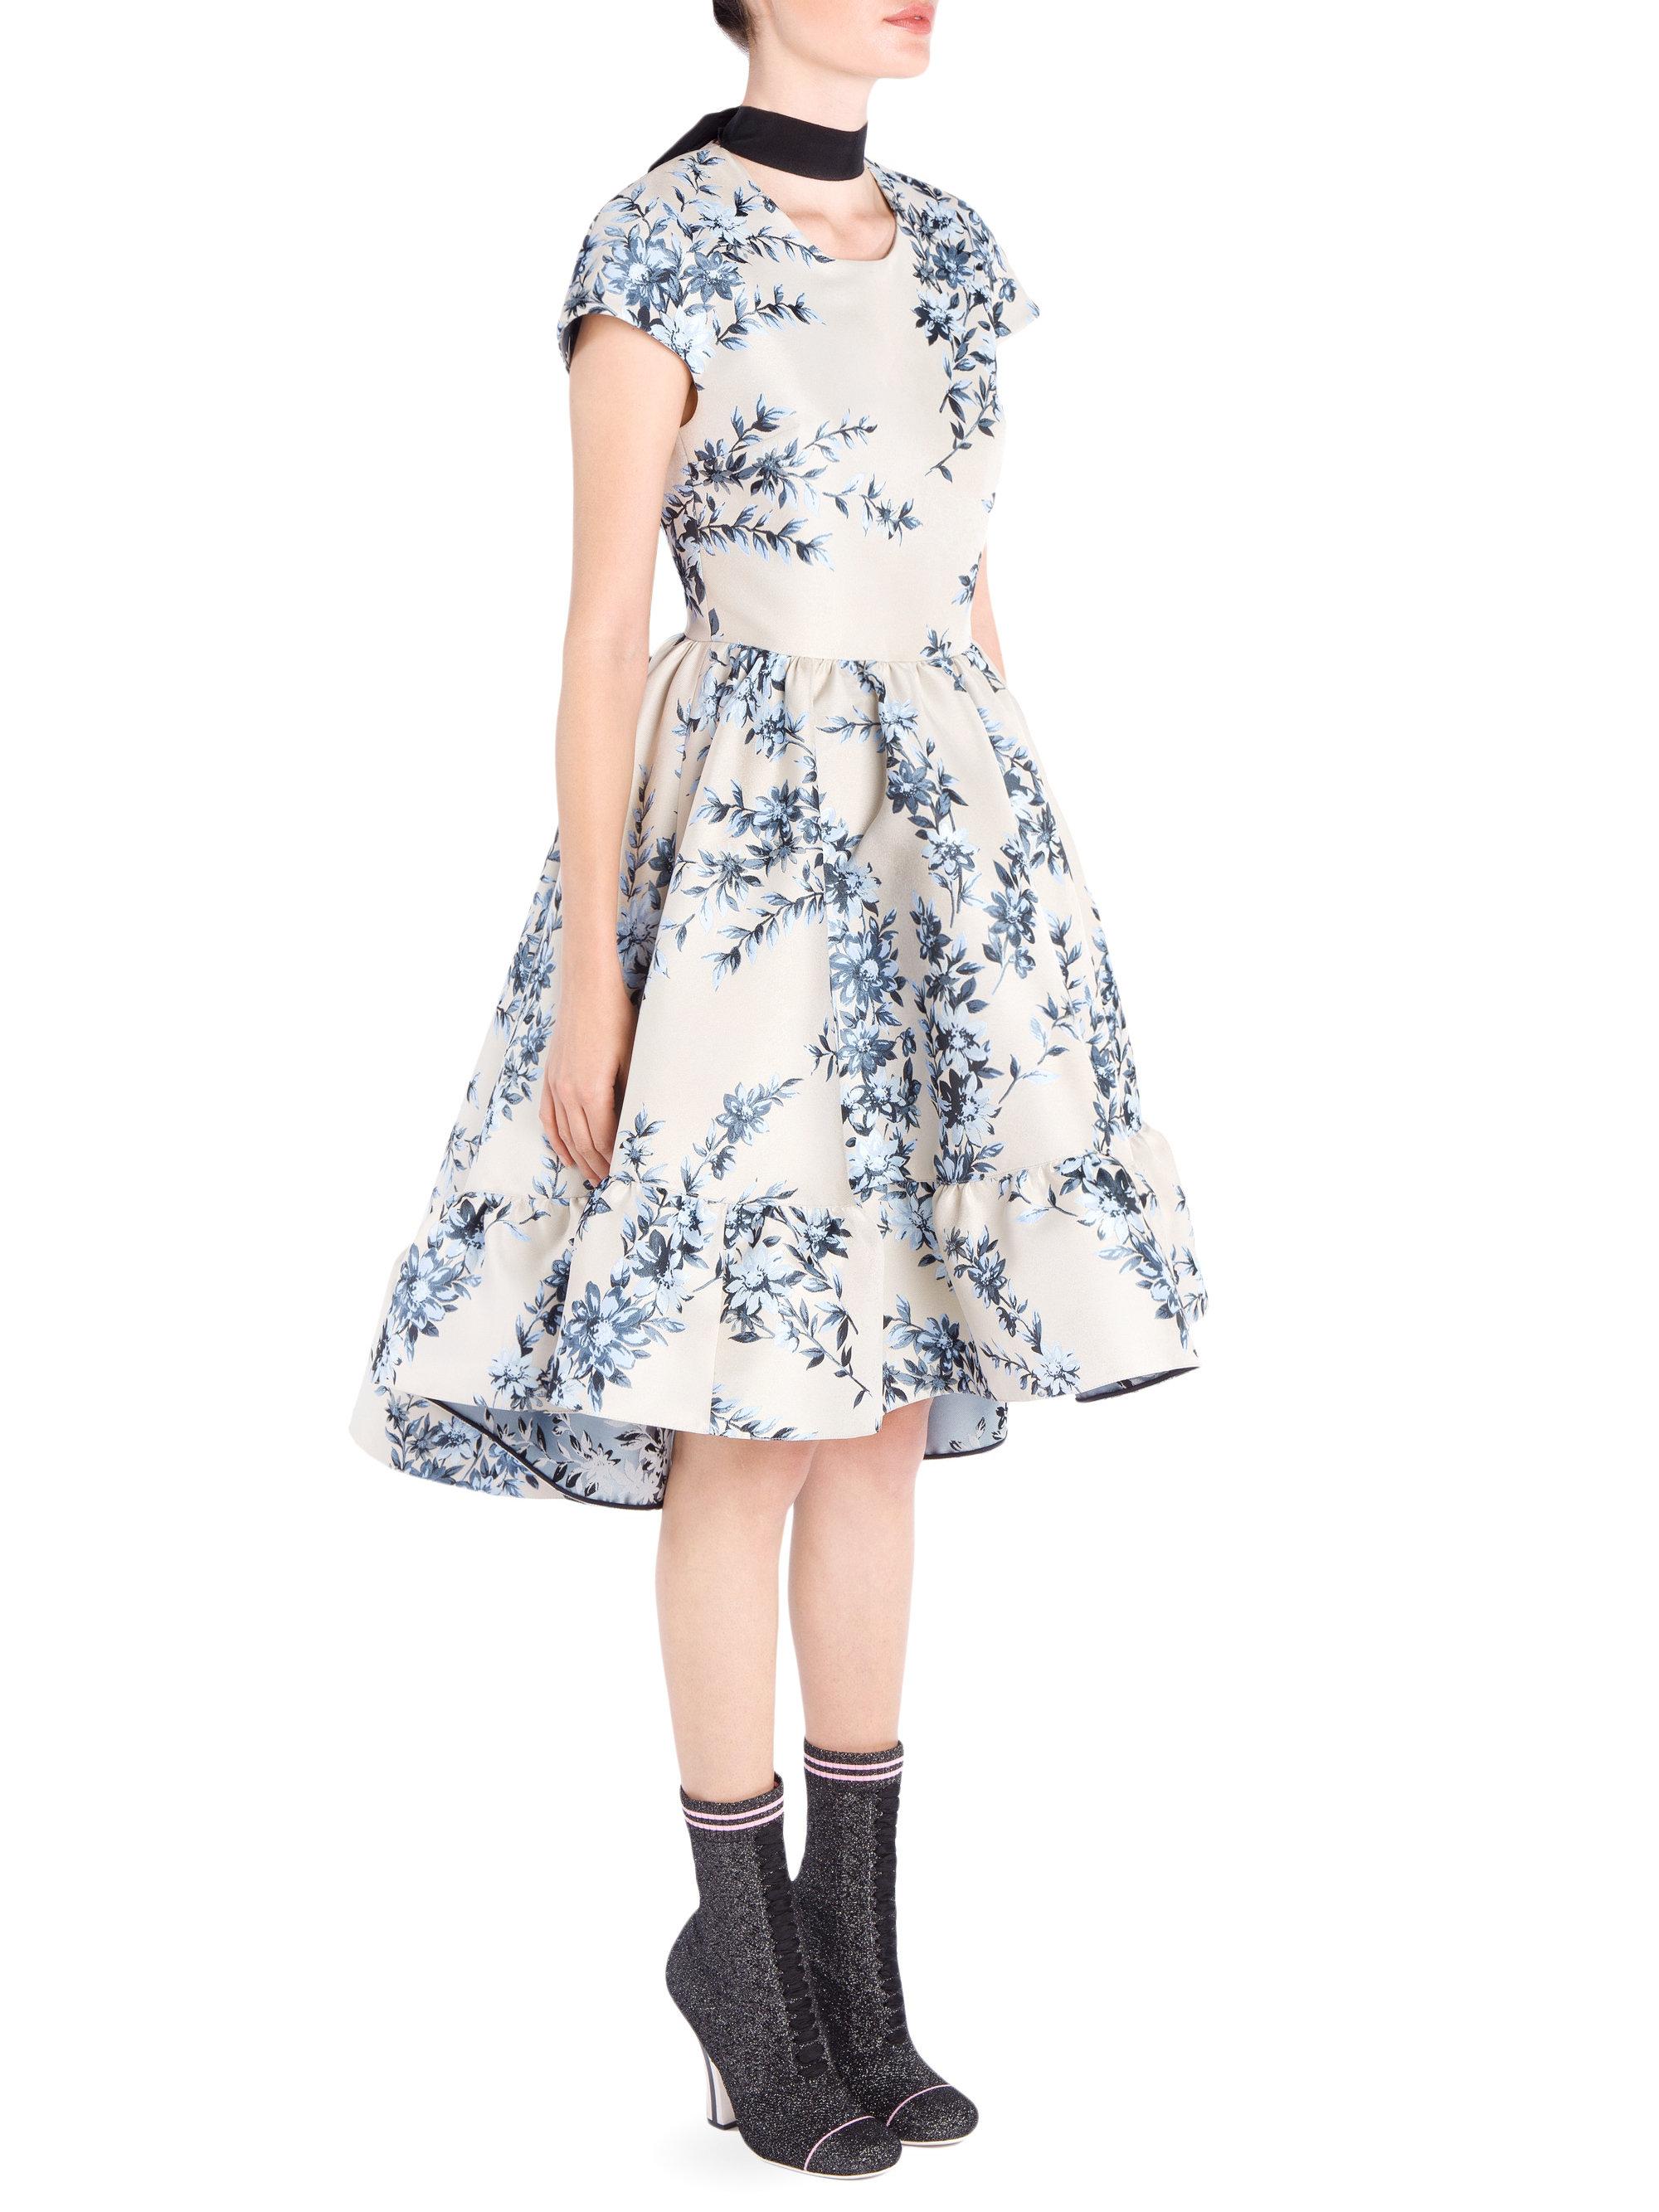 fendi floral dress